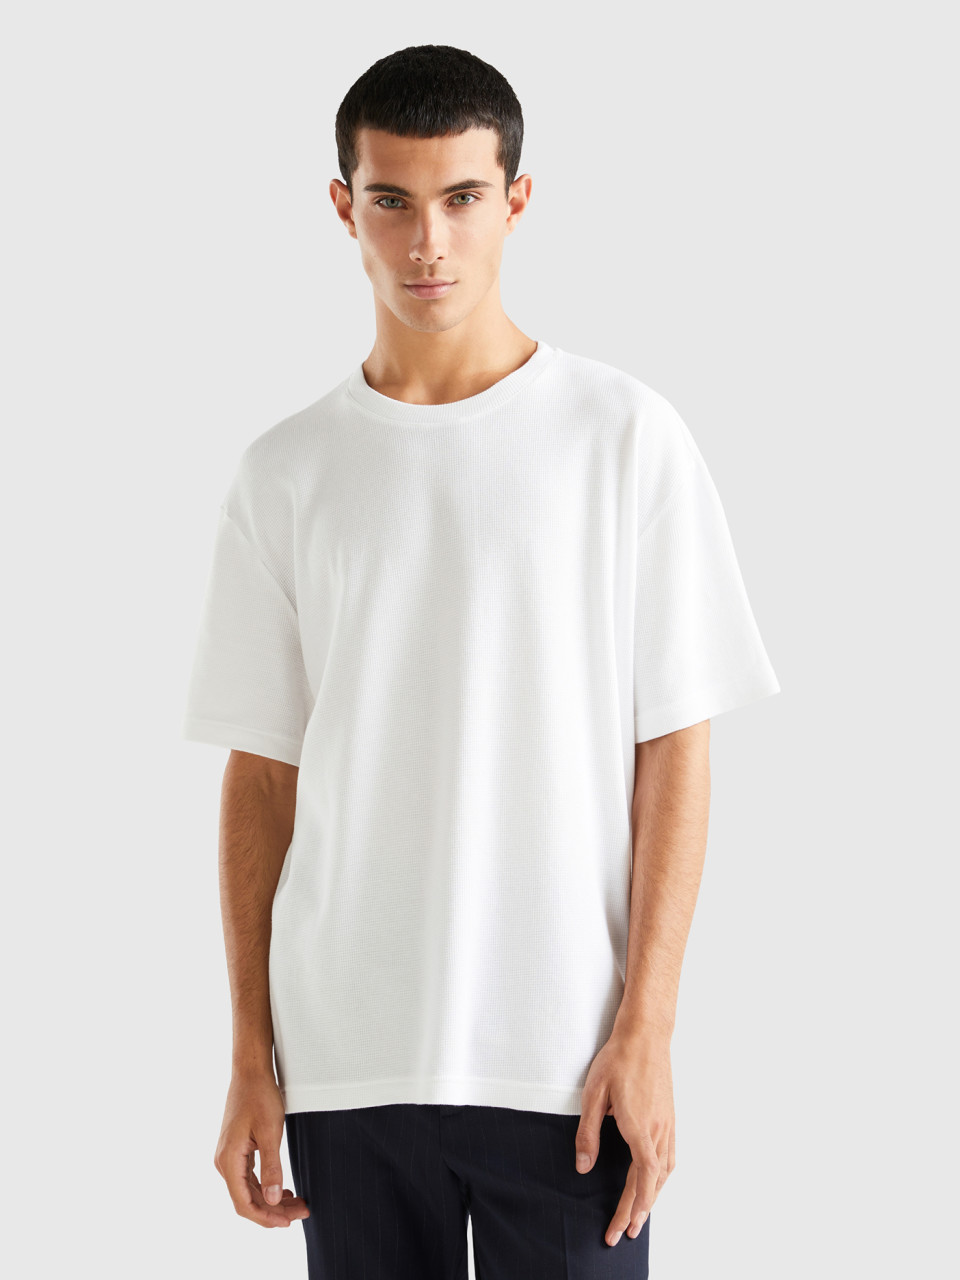 Benetton, Relaxed Fit T-shirt, Creamy White, Men